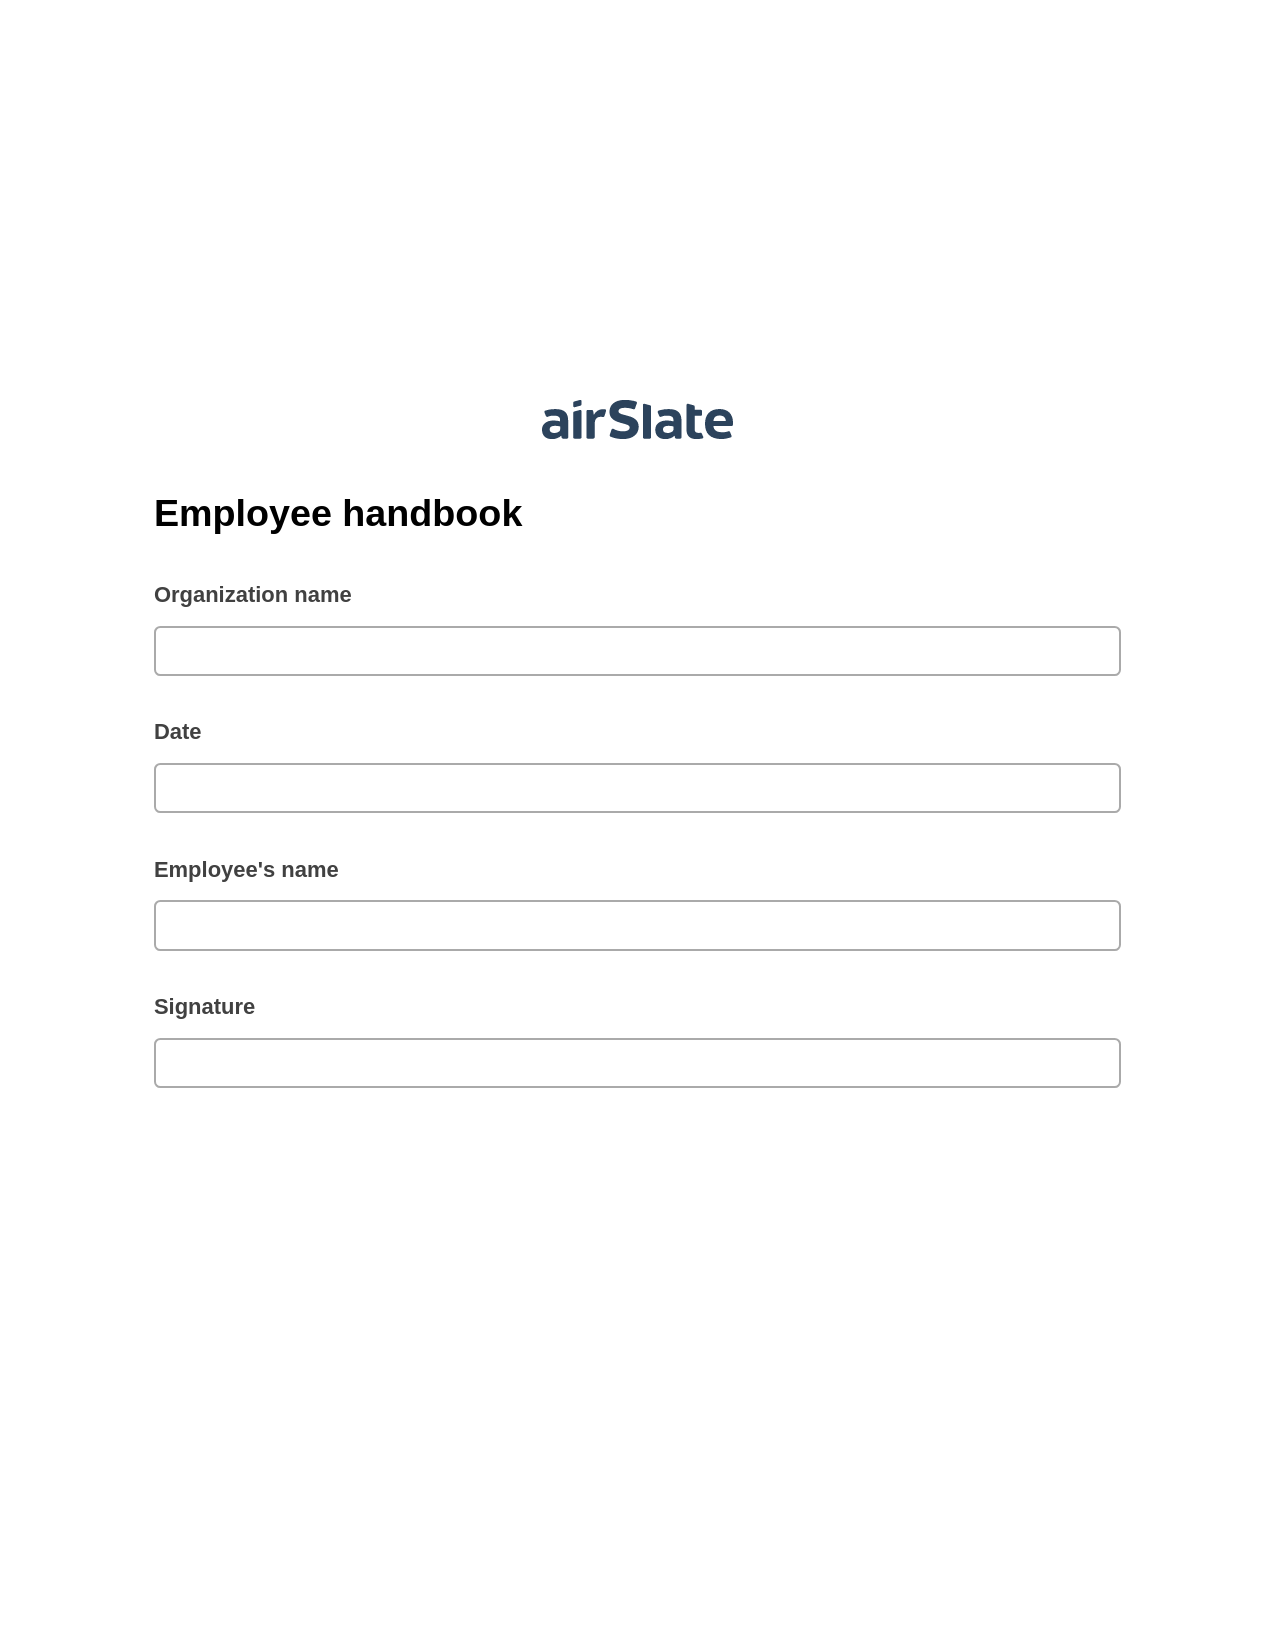 Multirole Employee handbook Pre-fill Slate from MS Dynamics 365 Records Bot, Slack Notification Bot, Google Drive Bot